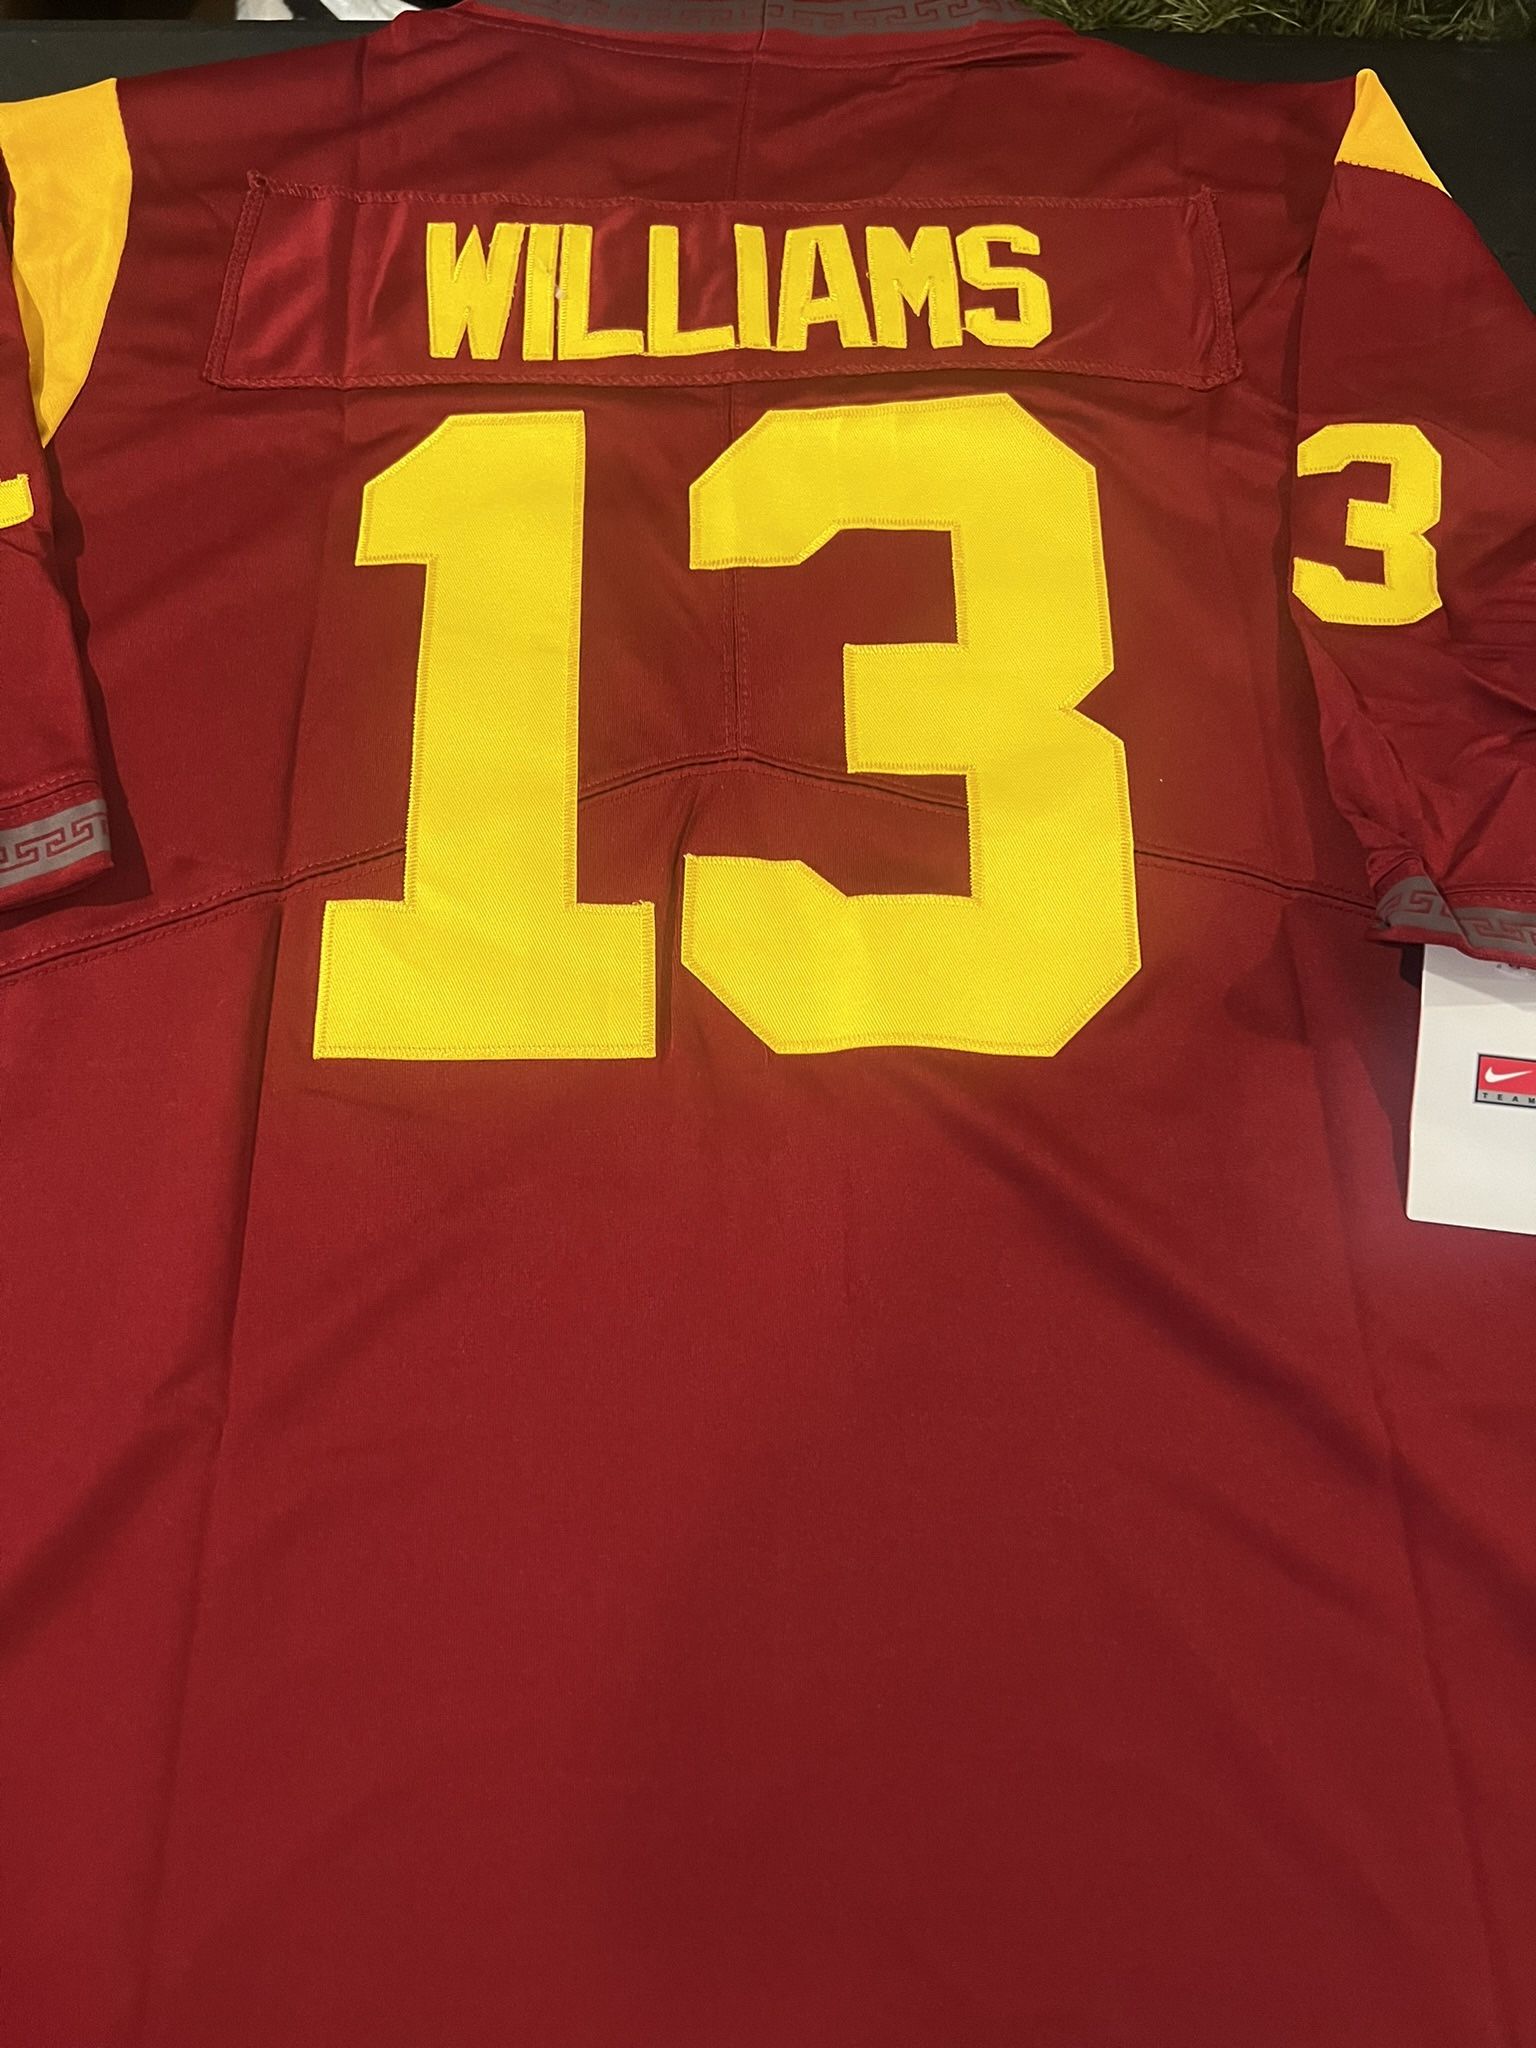 USC #13 Williams Jerseys. New 